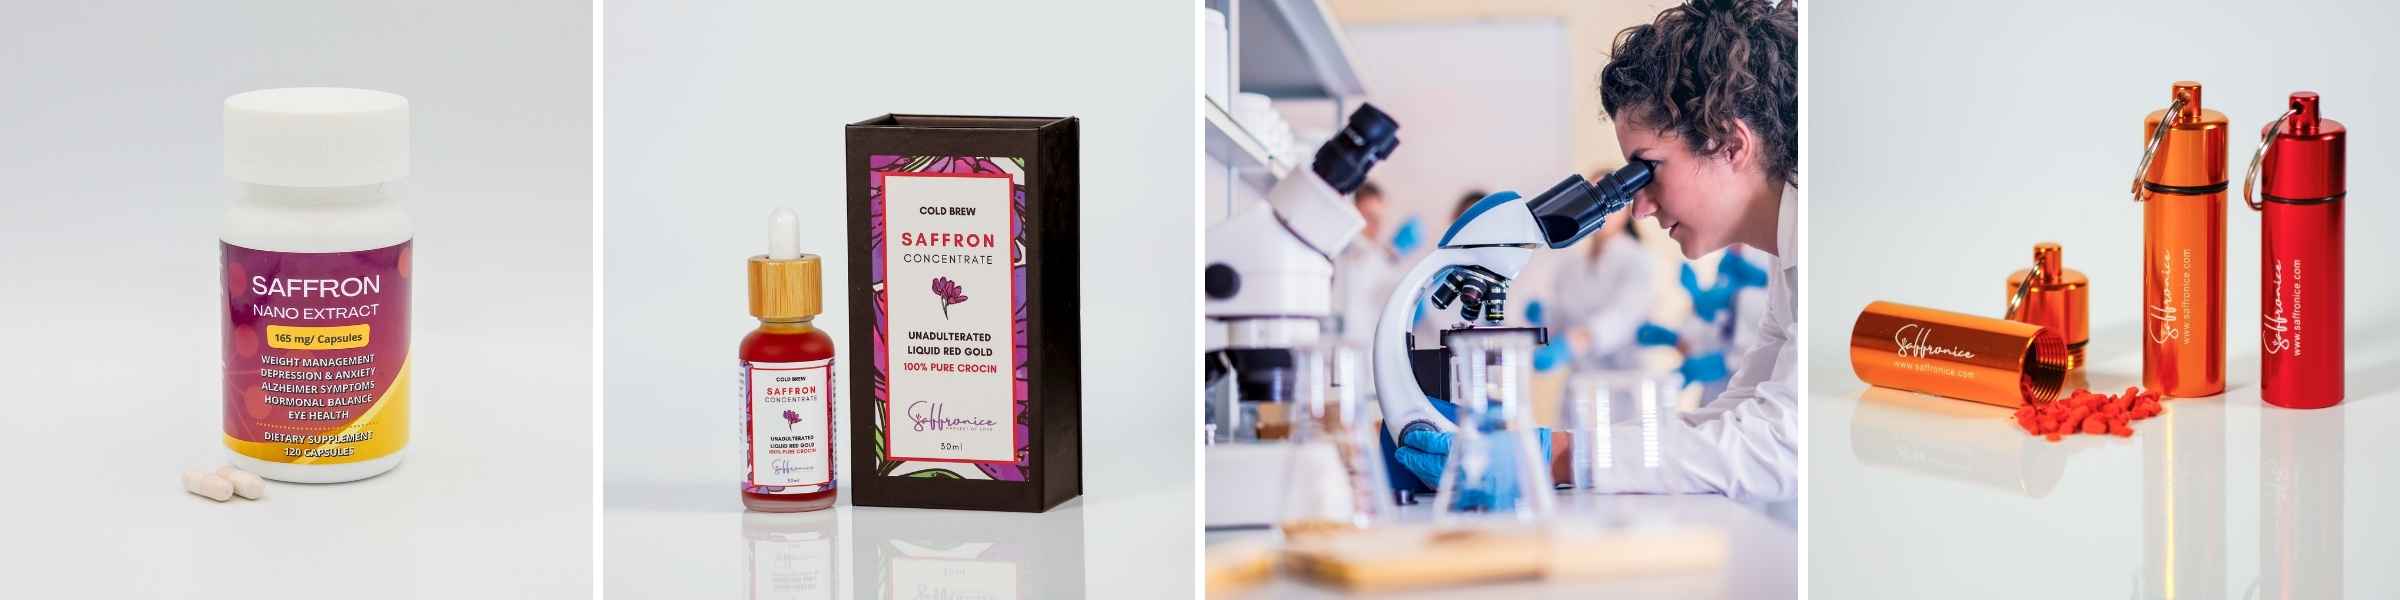 World's First Nano-Encapsulated Saffron Extract